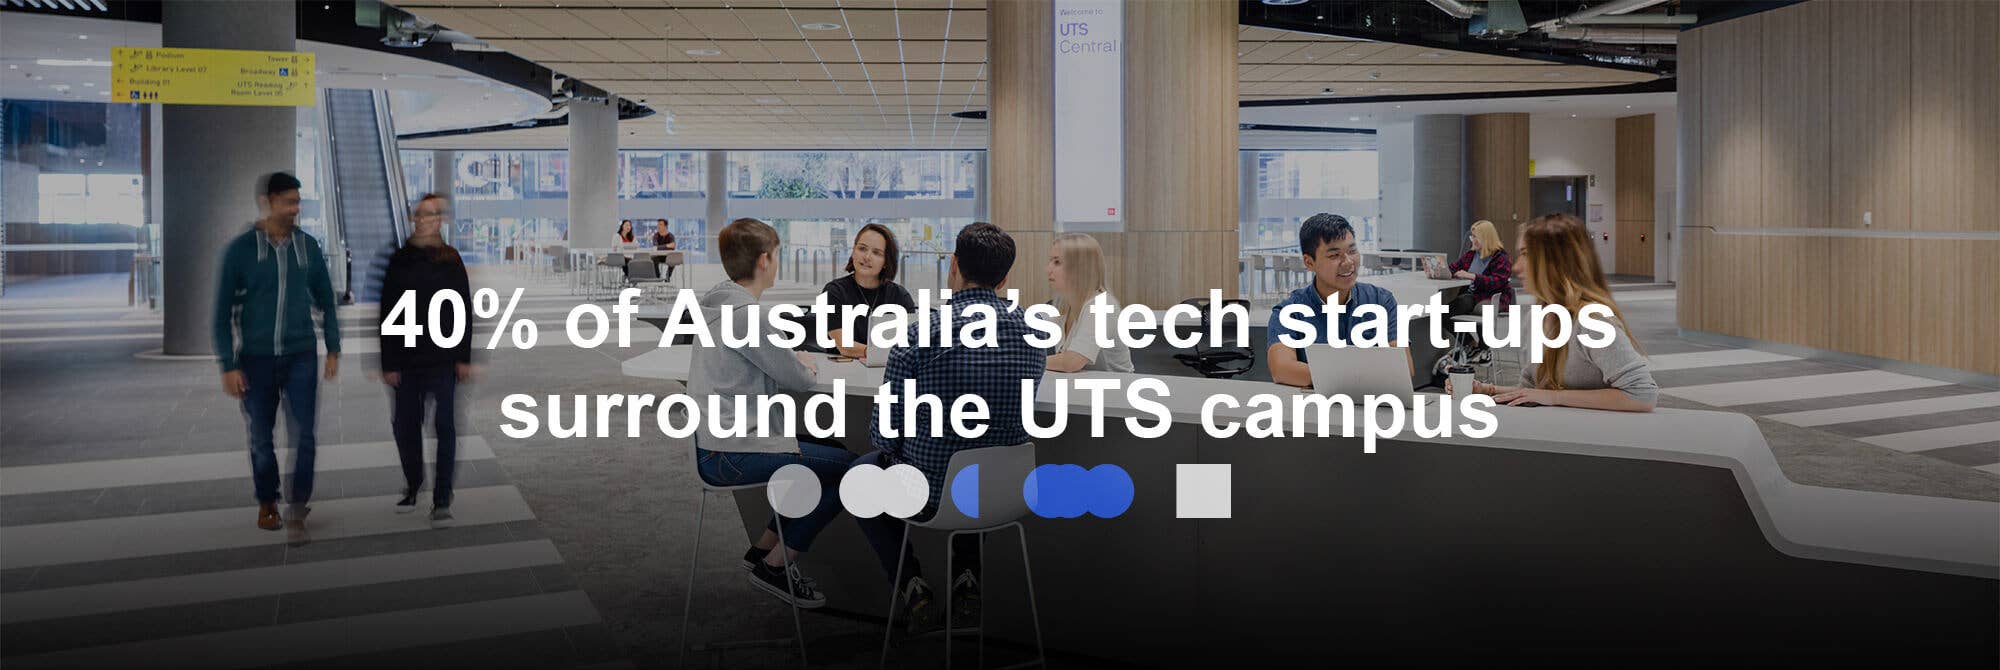 40% of Australia’s tech start-ups surround the UTS campus  